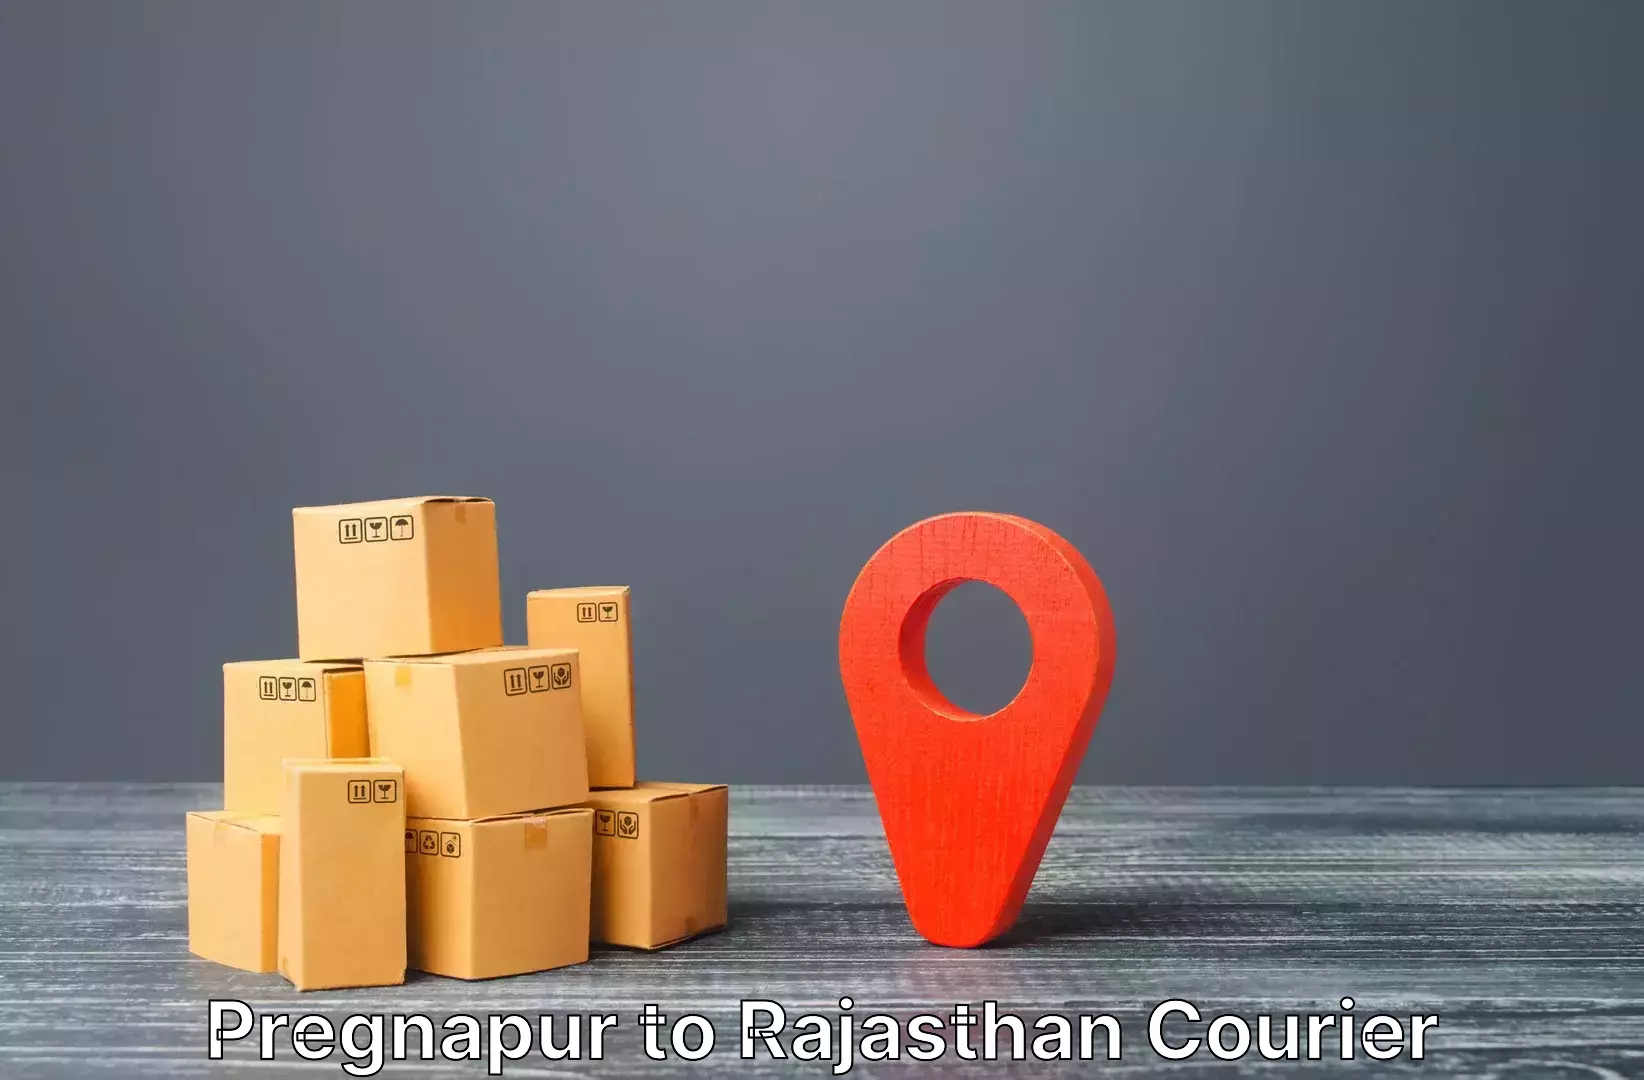 Baggage transport technology Pregnapur to Rajasthan